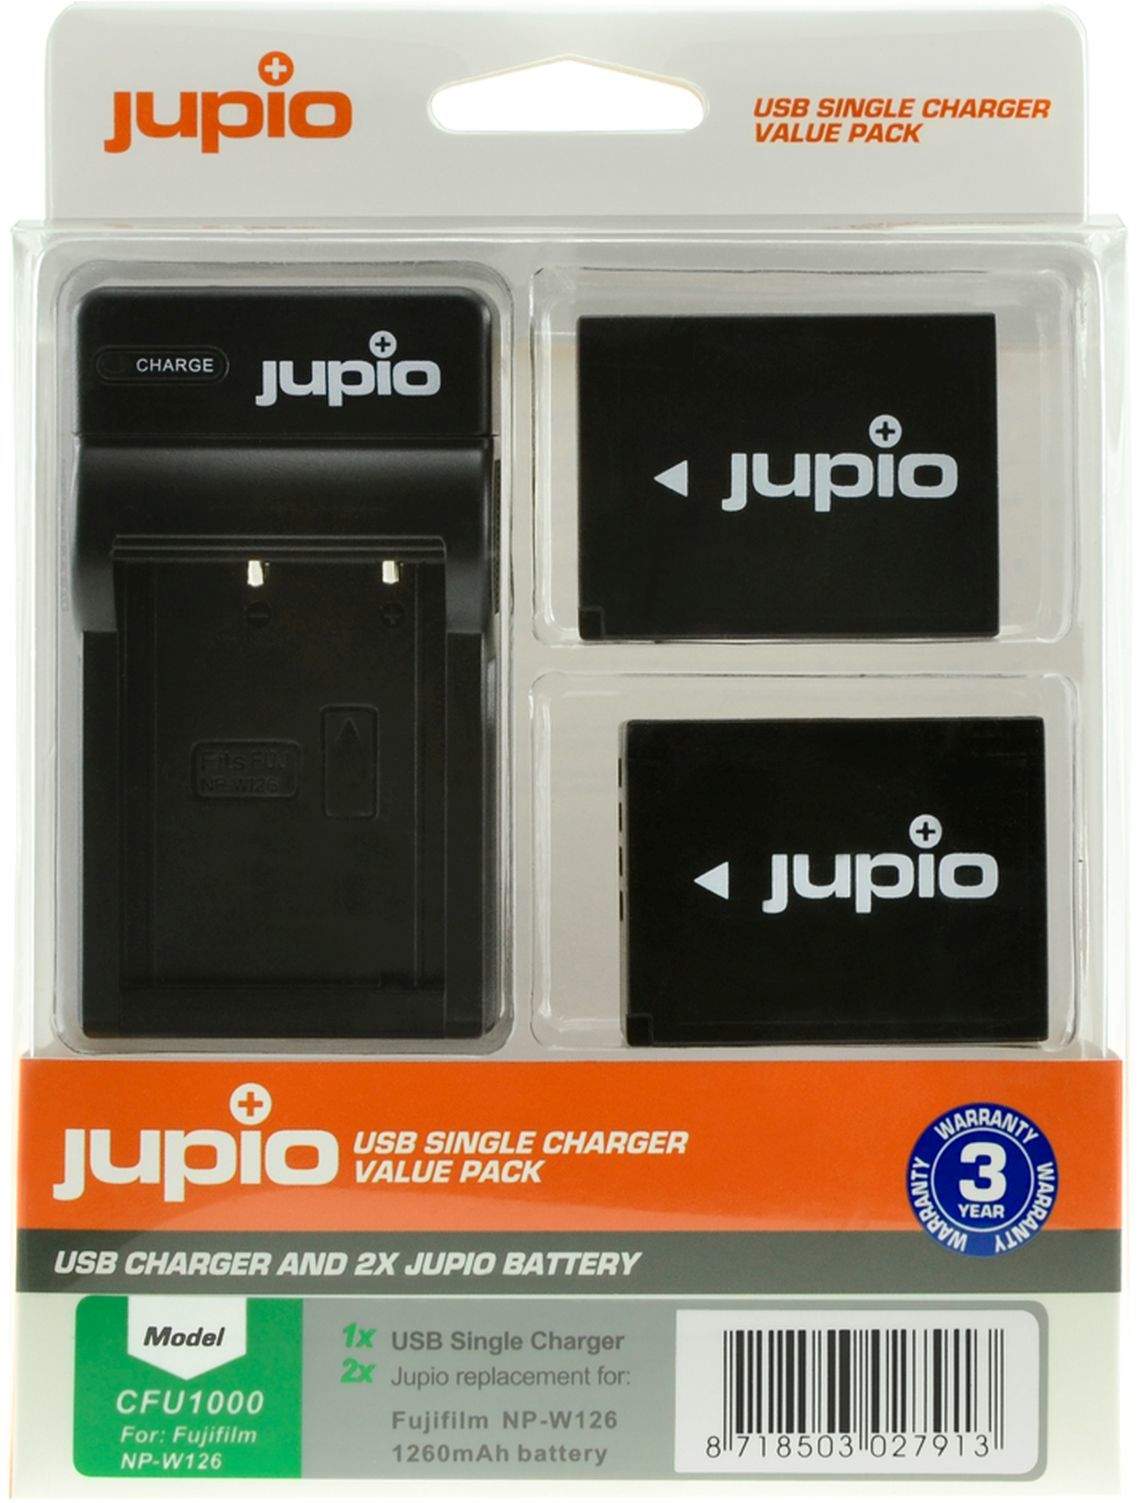 2 x Jupio Fuji NP-W126S Batteries & Single Charger Kit main image